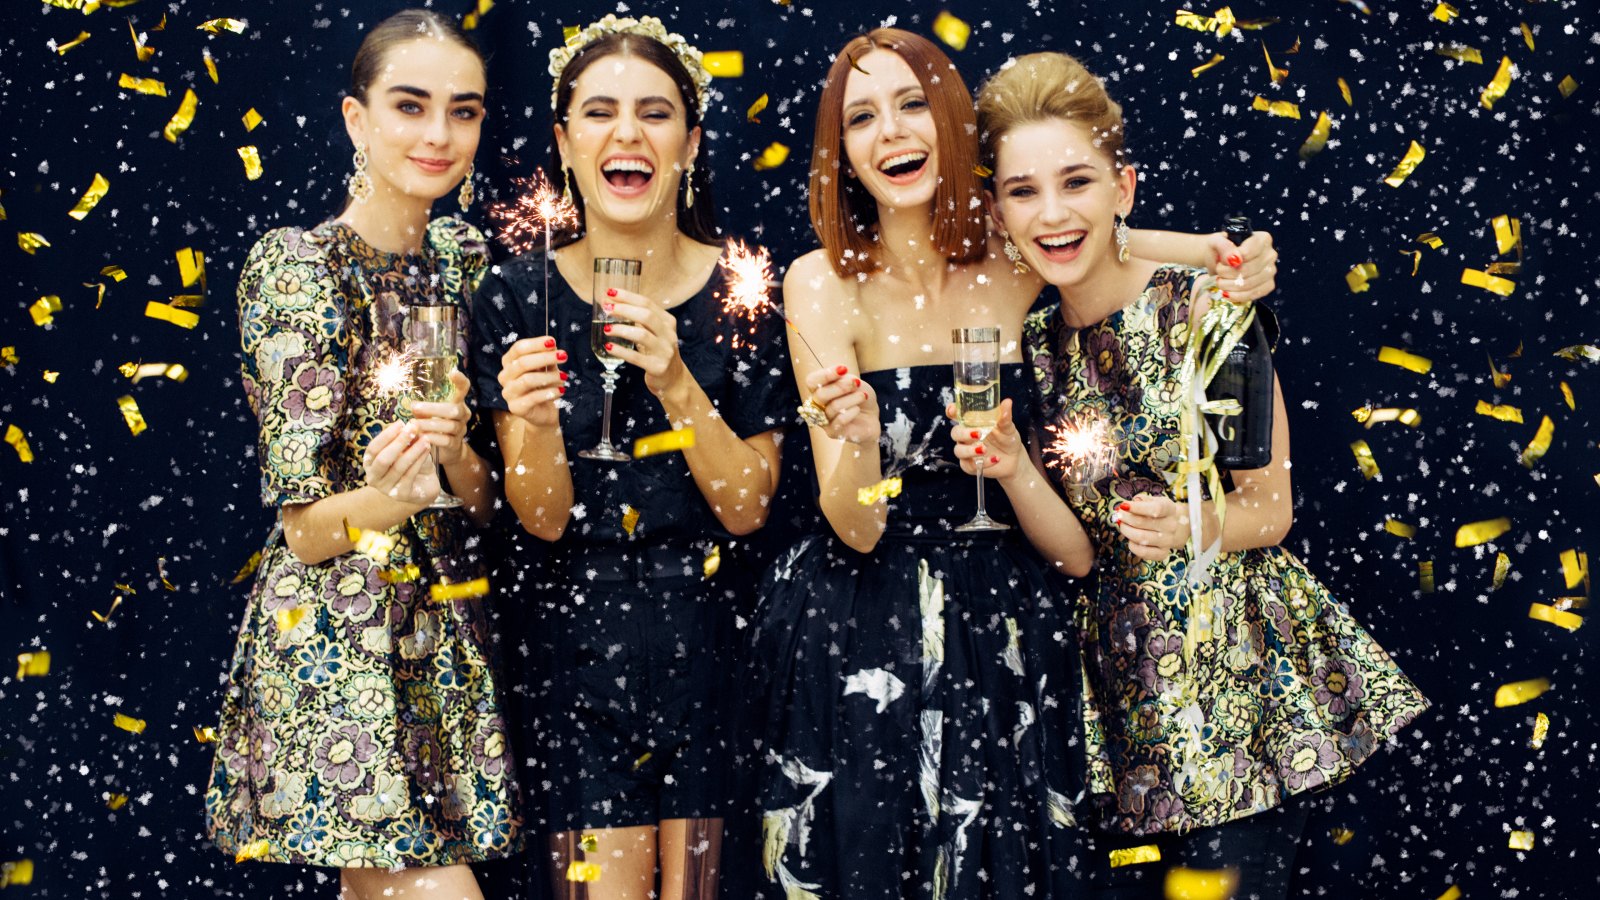 women celebrating New Year's Eve